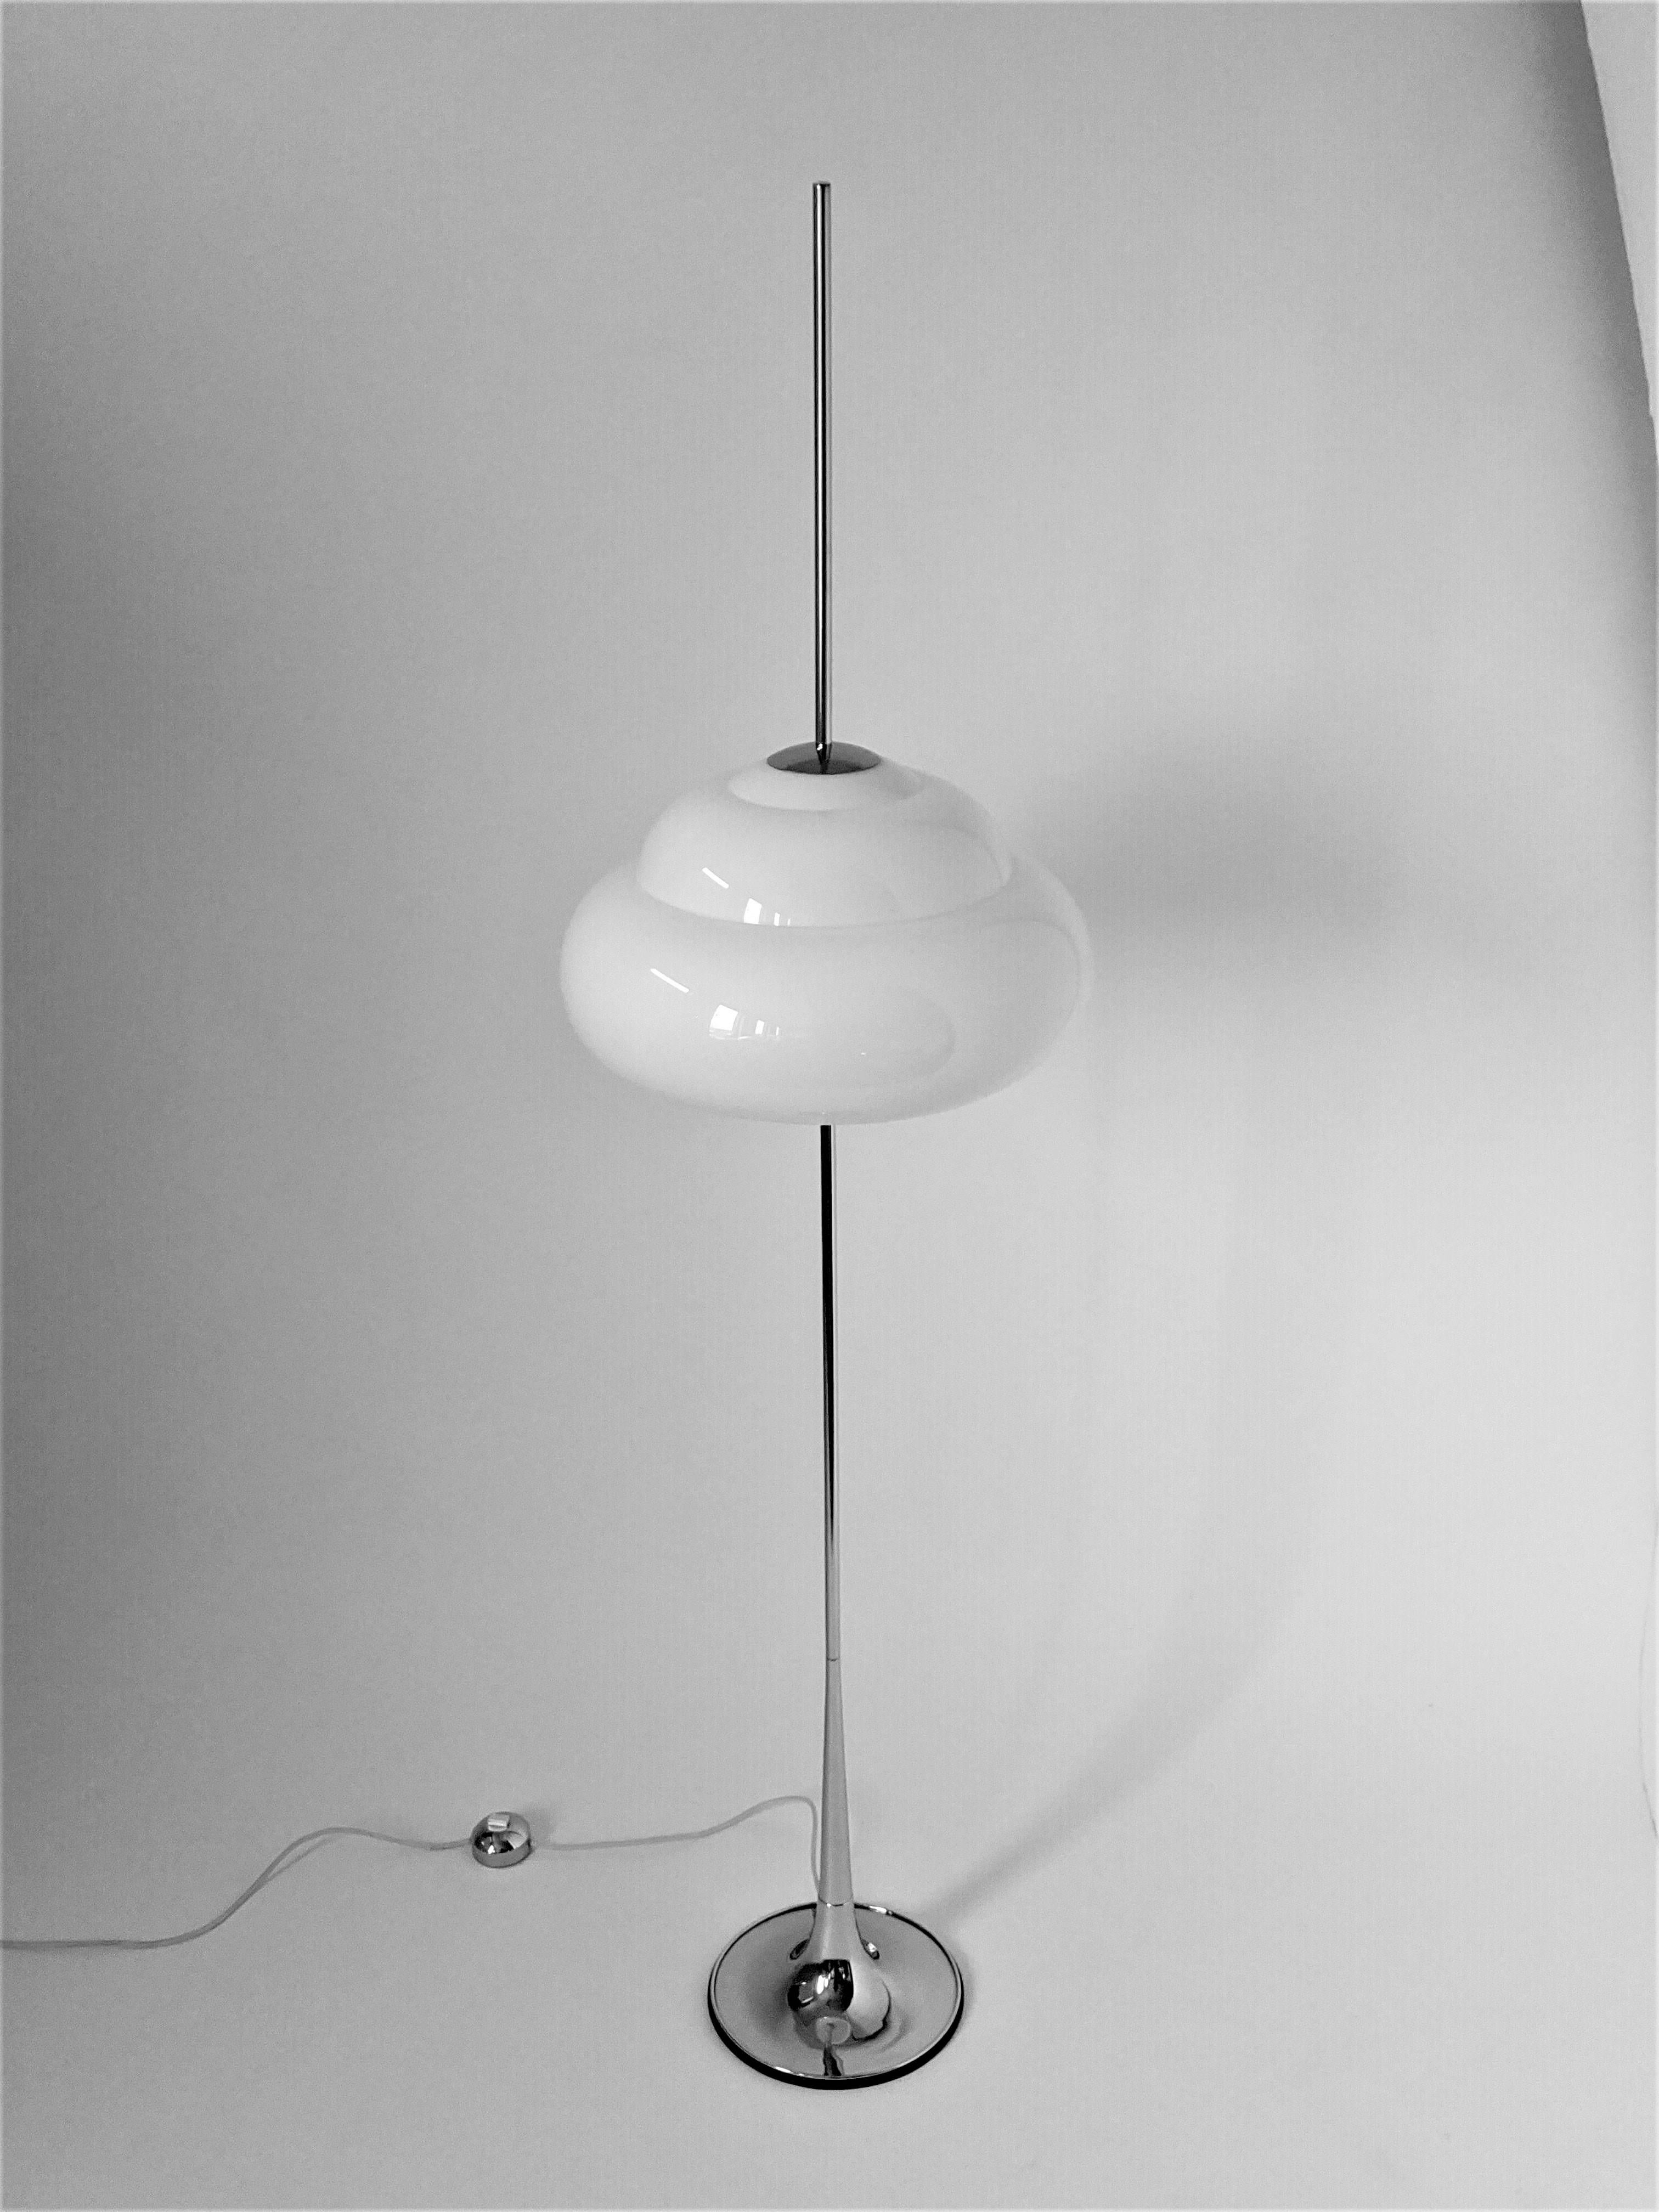 1970s Reggiani Chrome Floor Lamp with Opale Acrylic Shade, Italy For Sale 4